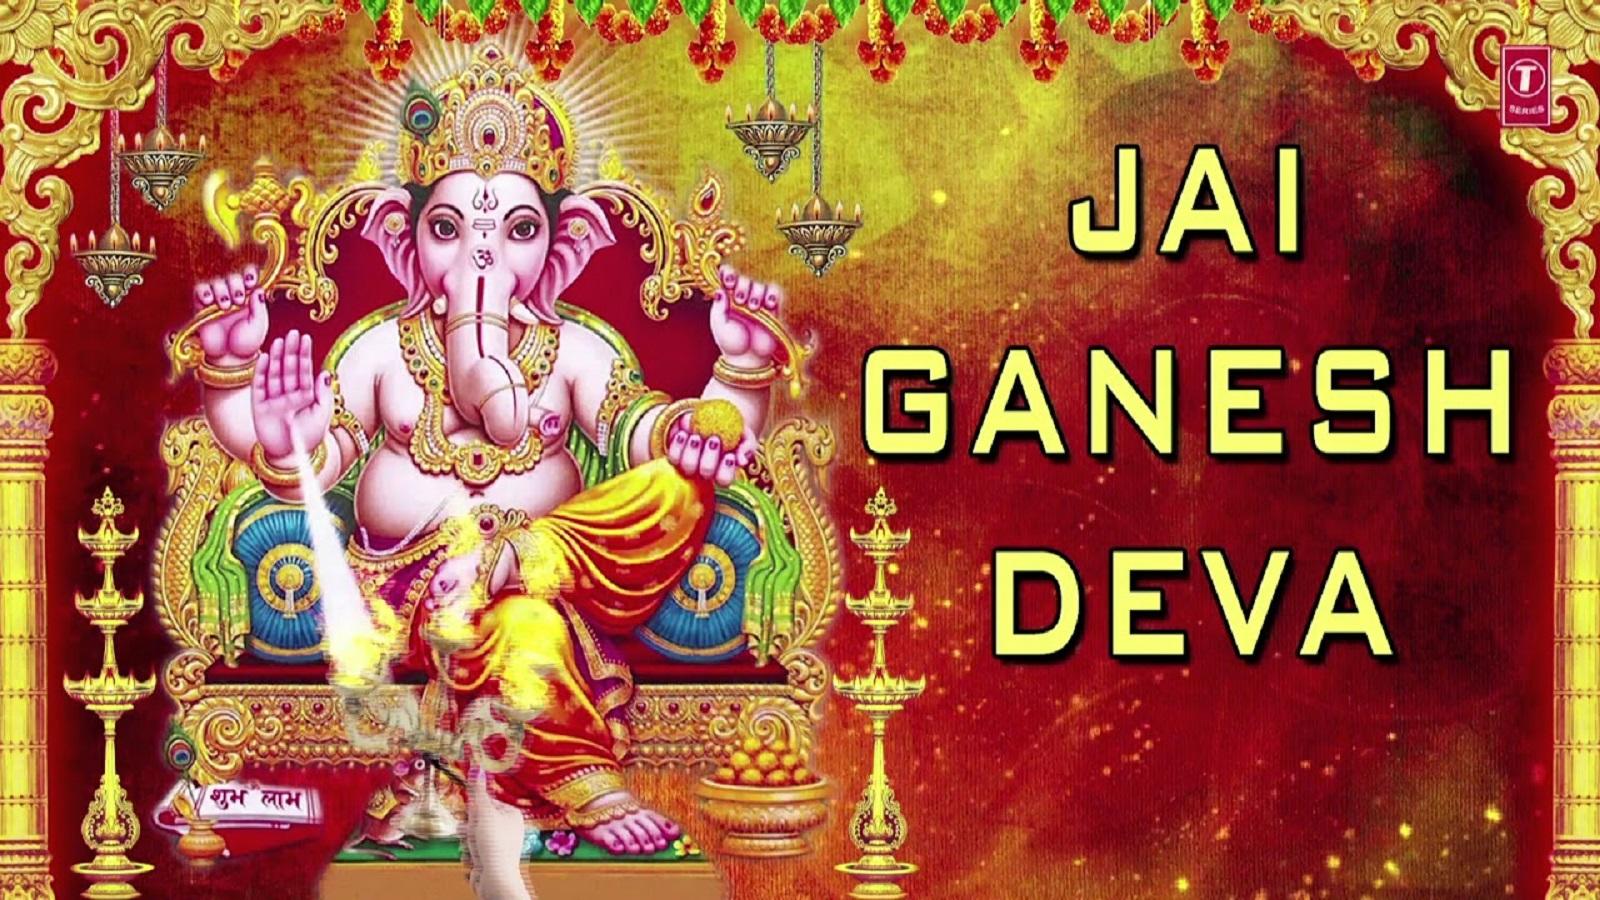 Ganesh Bhajan 'Jai Ganesh Deva' Sung by Hariharan | Ganesh Ji Ki Aarti in  Hindi | Happy Diwali 2019 | Hindi Video Songs - Times of India